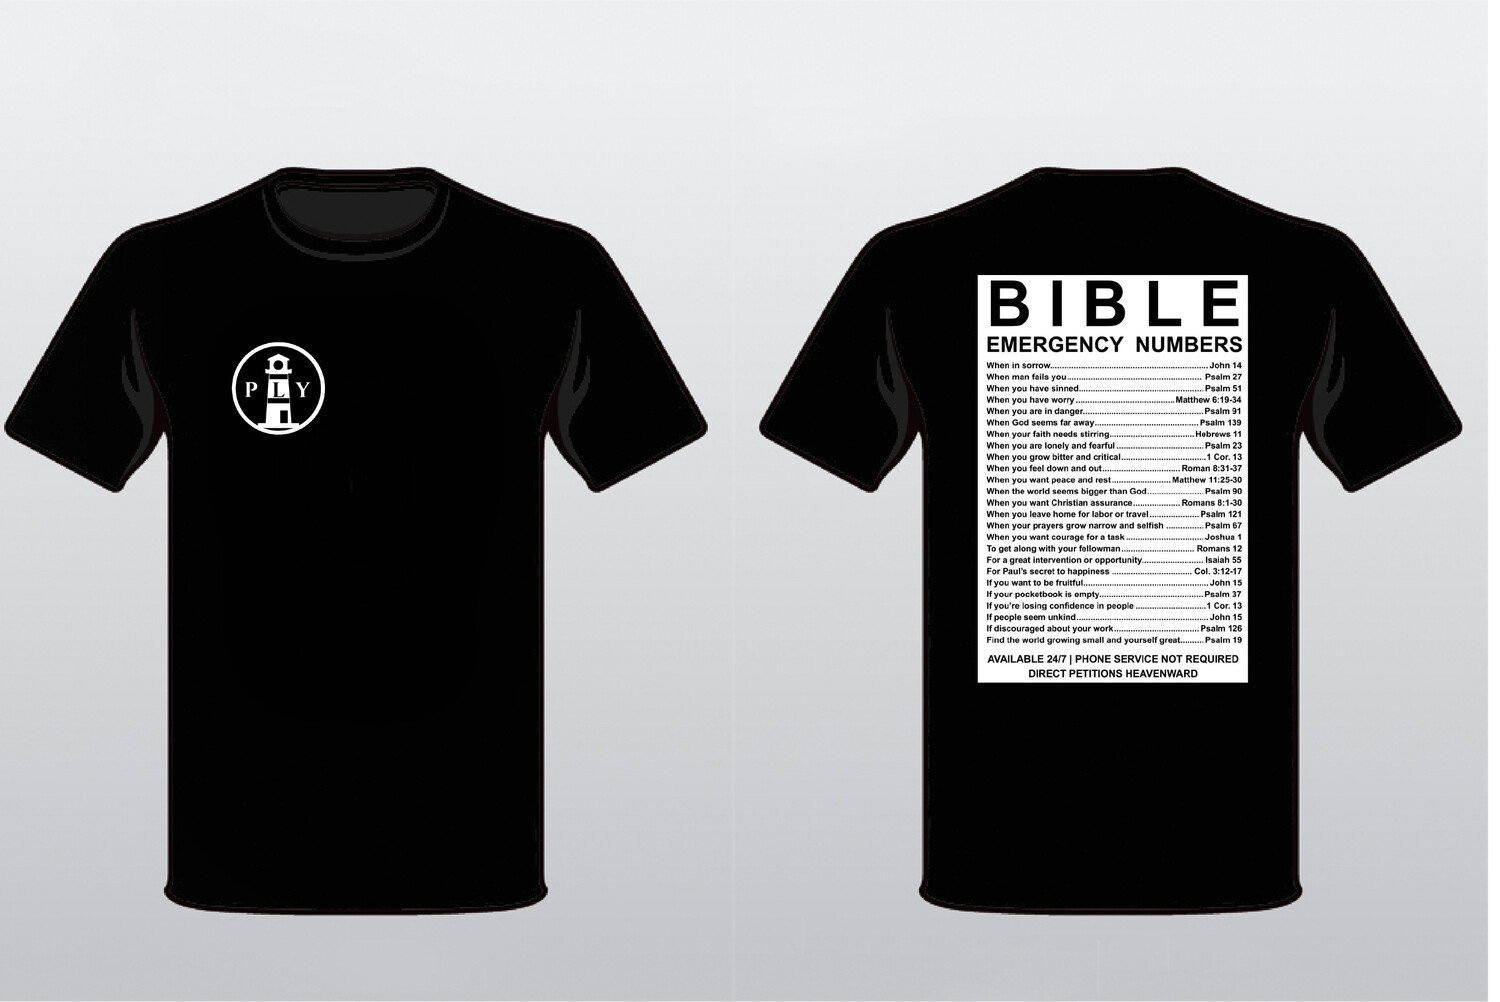 Bible Emergency PLY Shirts